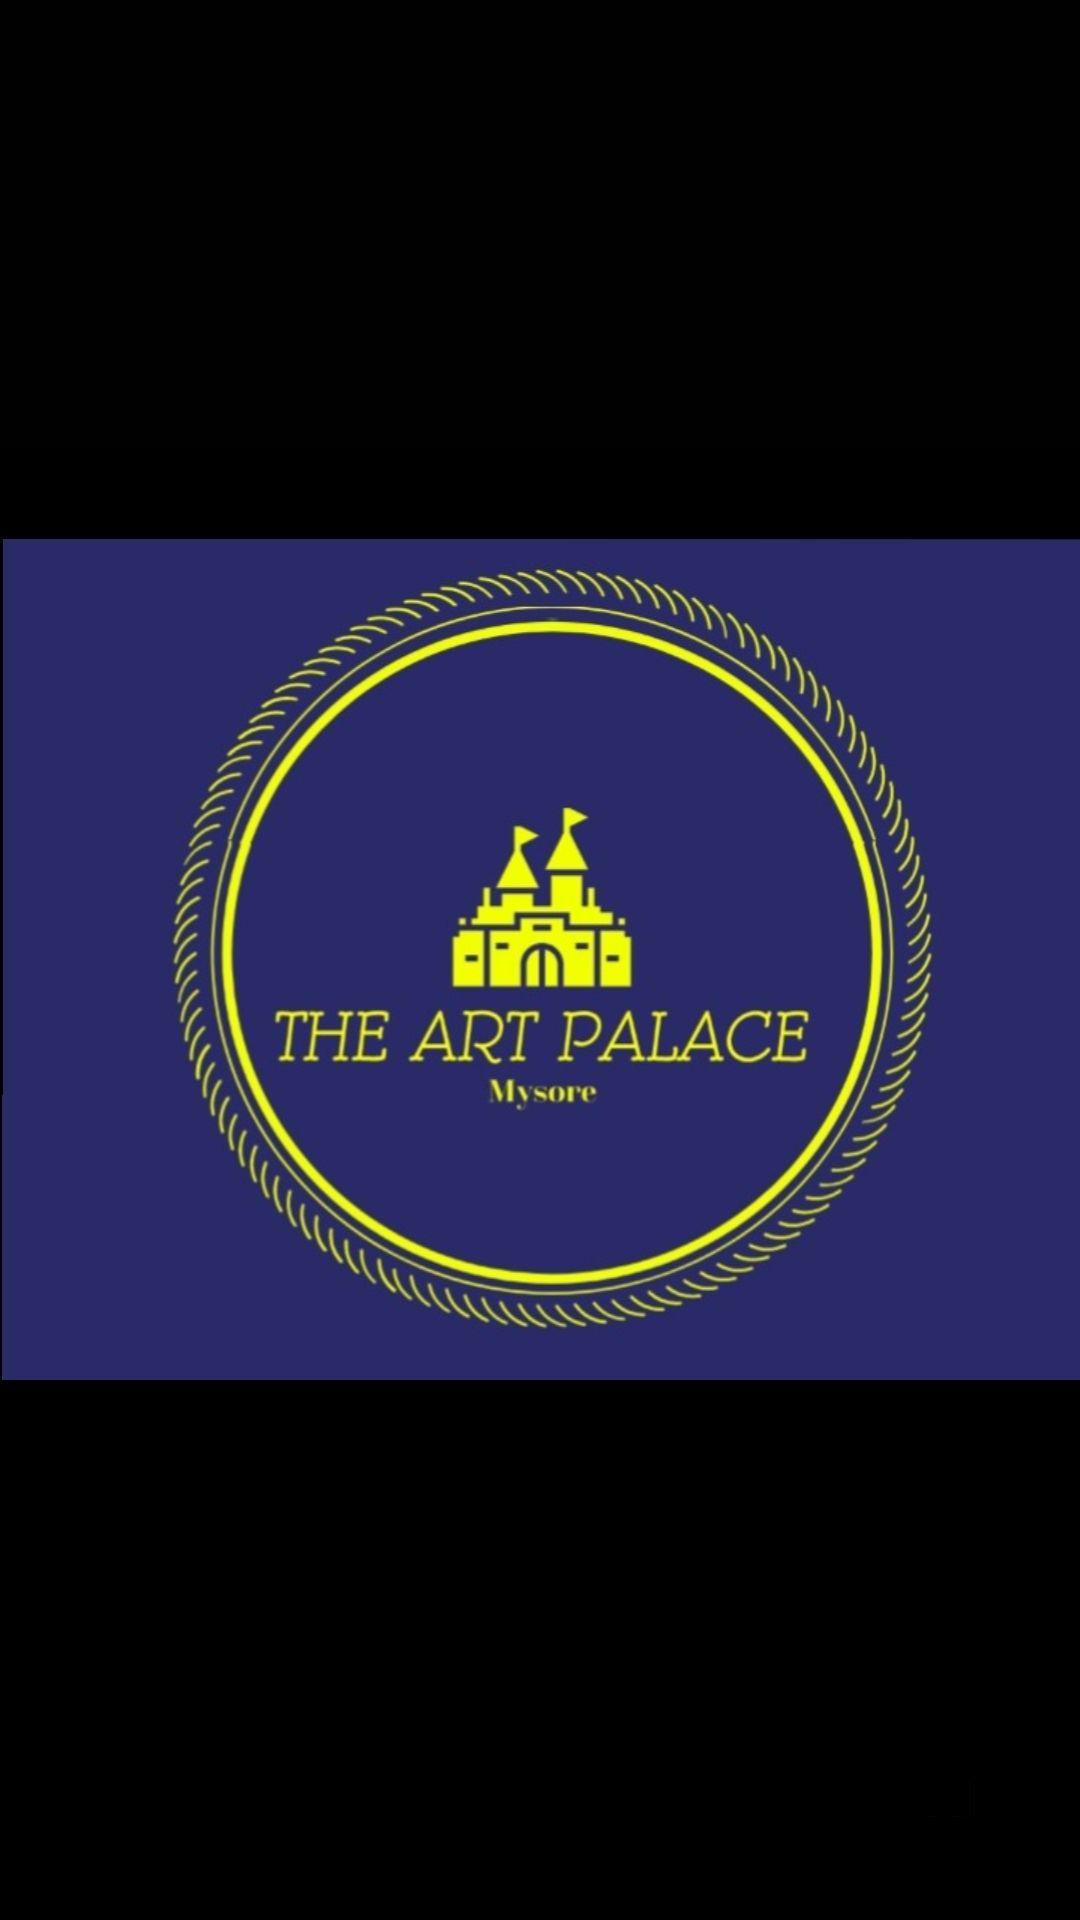 Art Palace Logo - The Art Palace Photos, Ashoka Road, Mysore- Pictures & Images ...